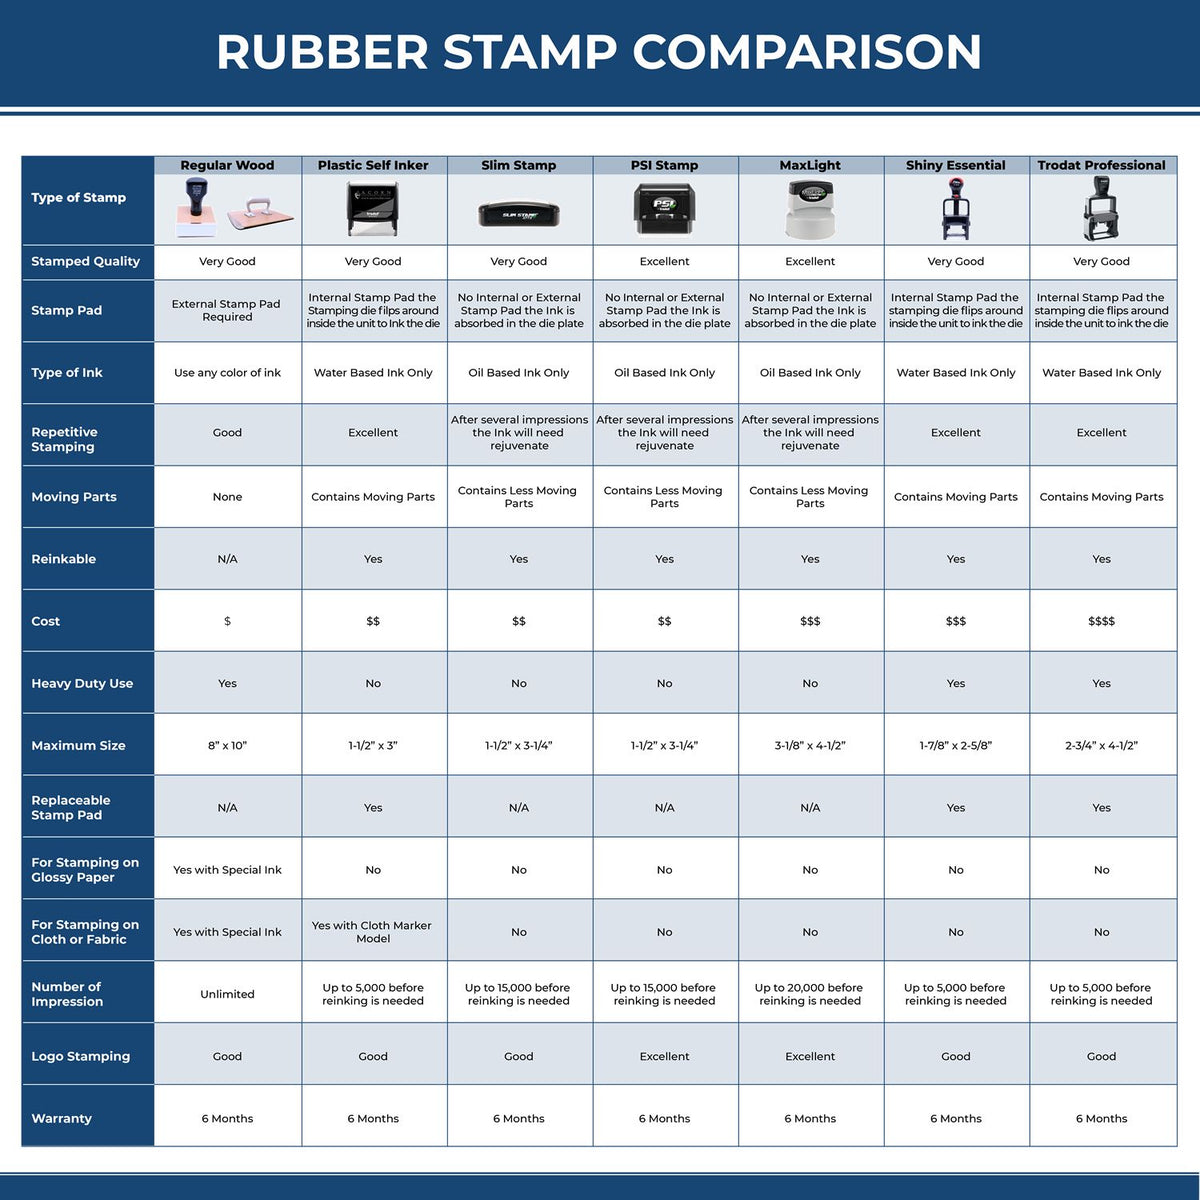 Large Letter Post Rubber Stamp 4964R Rubber Stamp Comparison